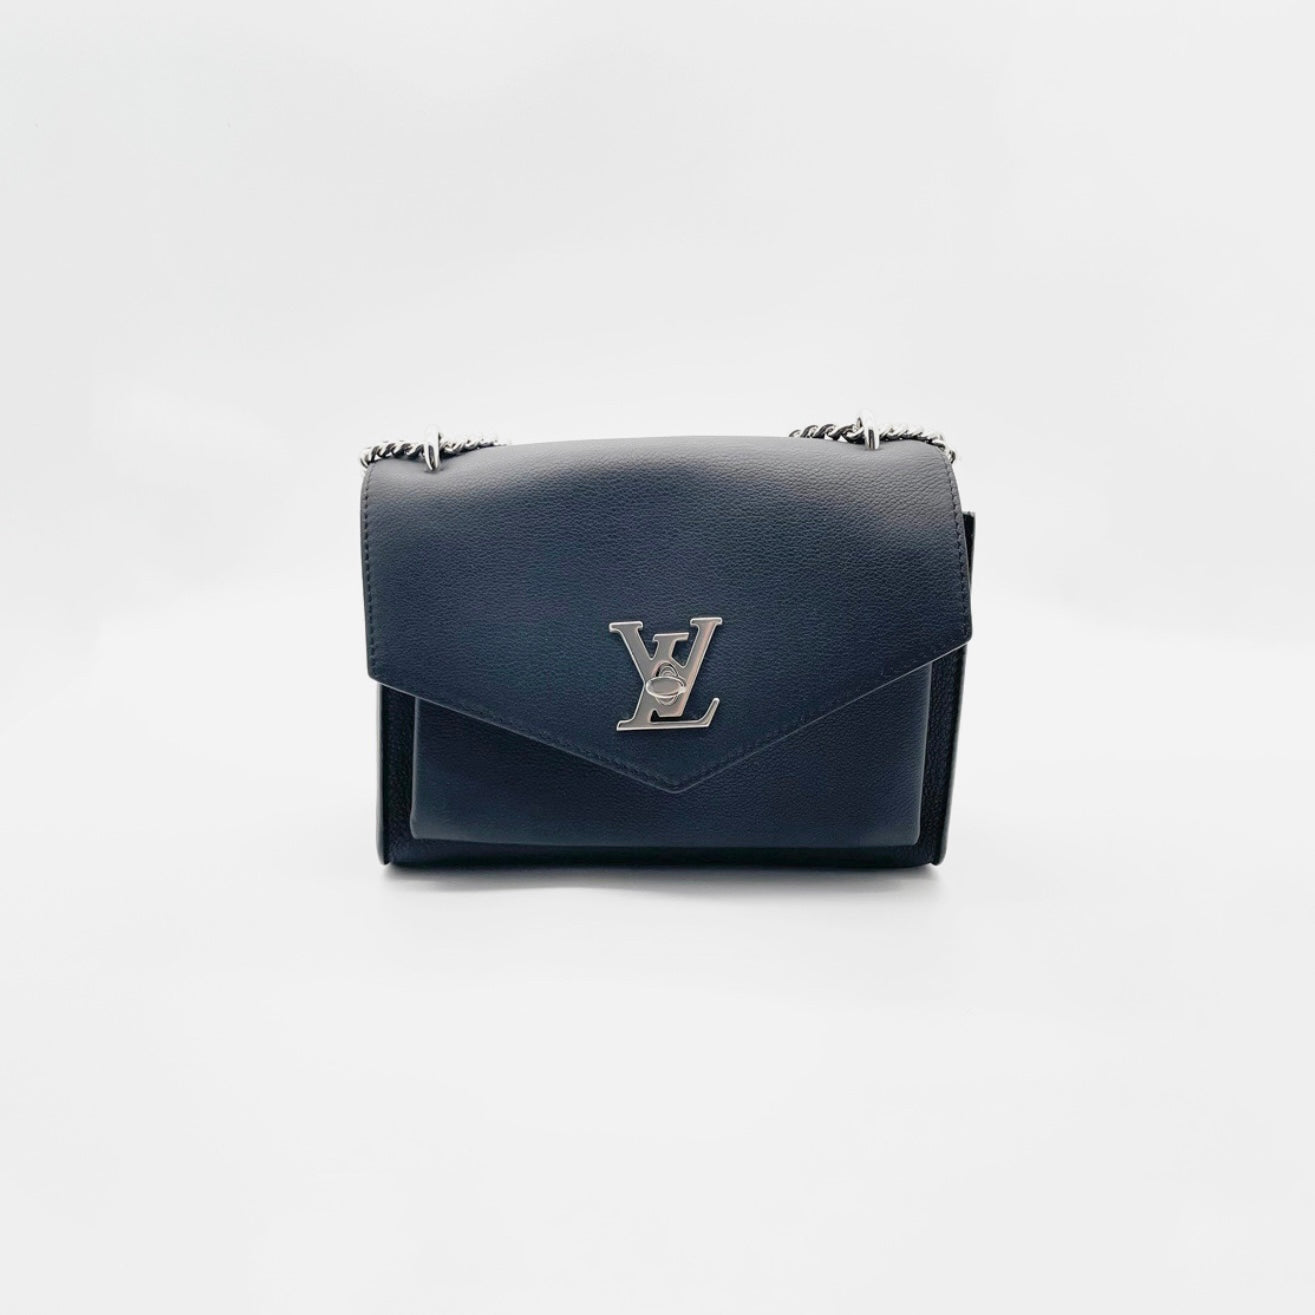 EXC!! Louis Vuitton Lock Me Ever BB My LockMe 2Way MINI BB bag Unicorn RARE!